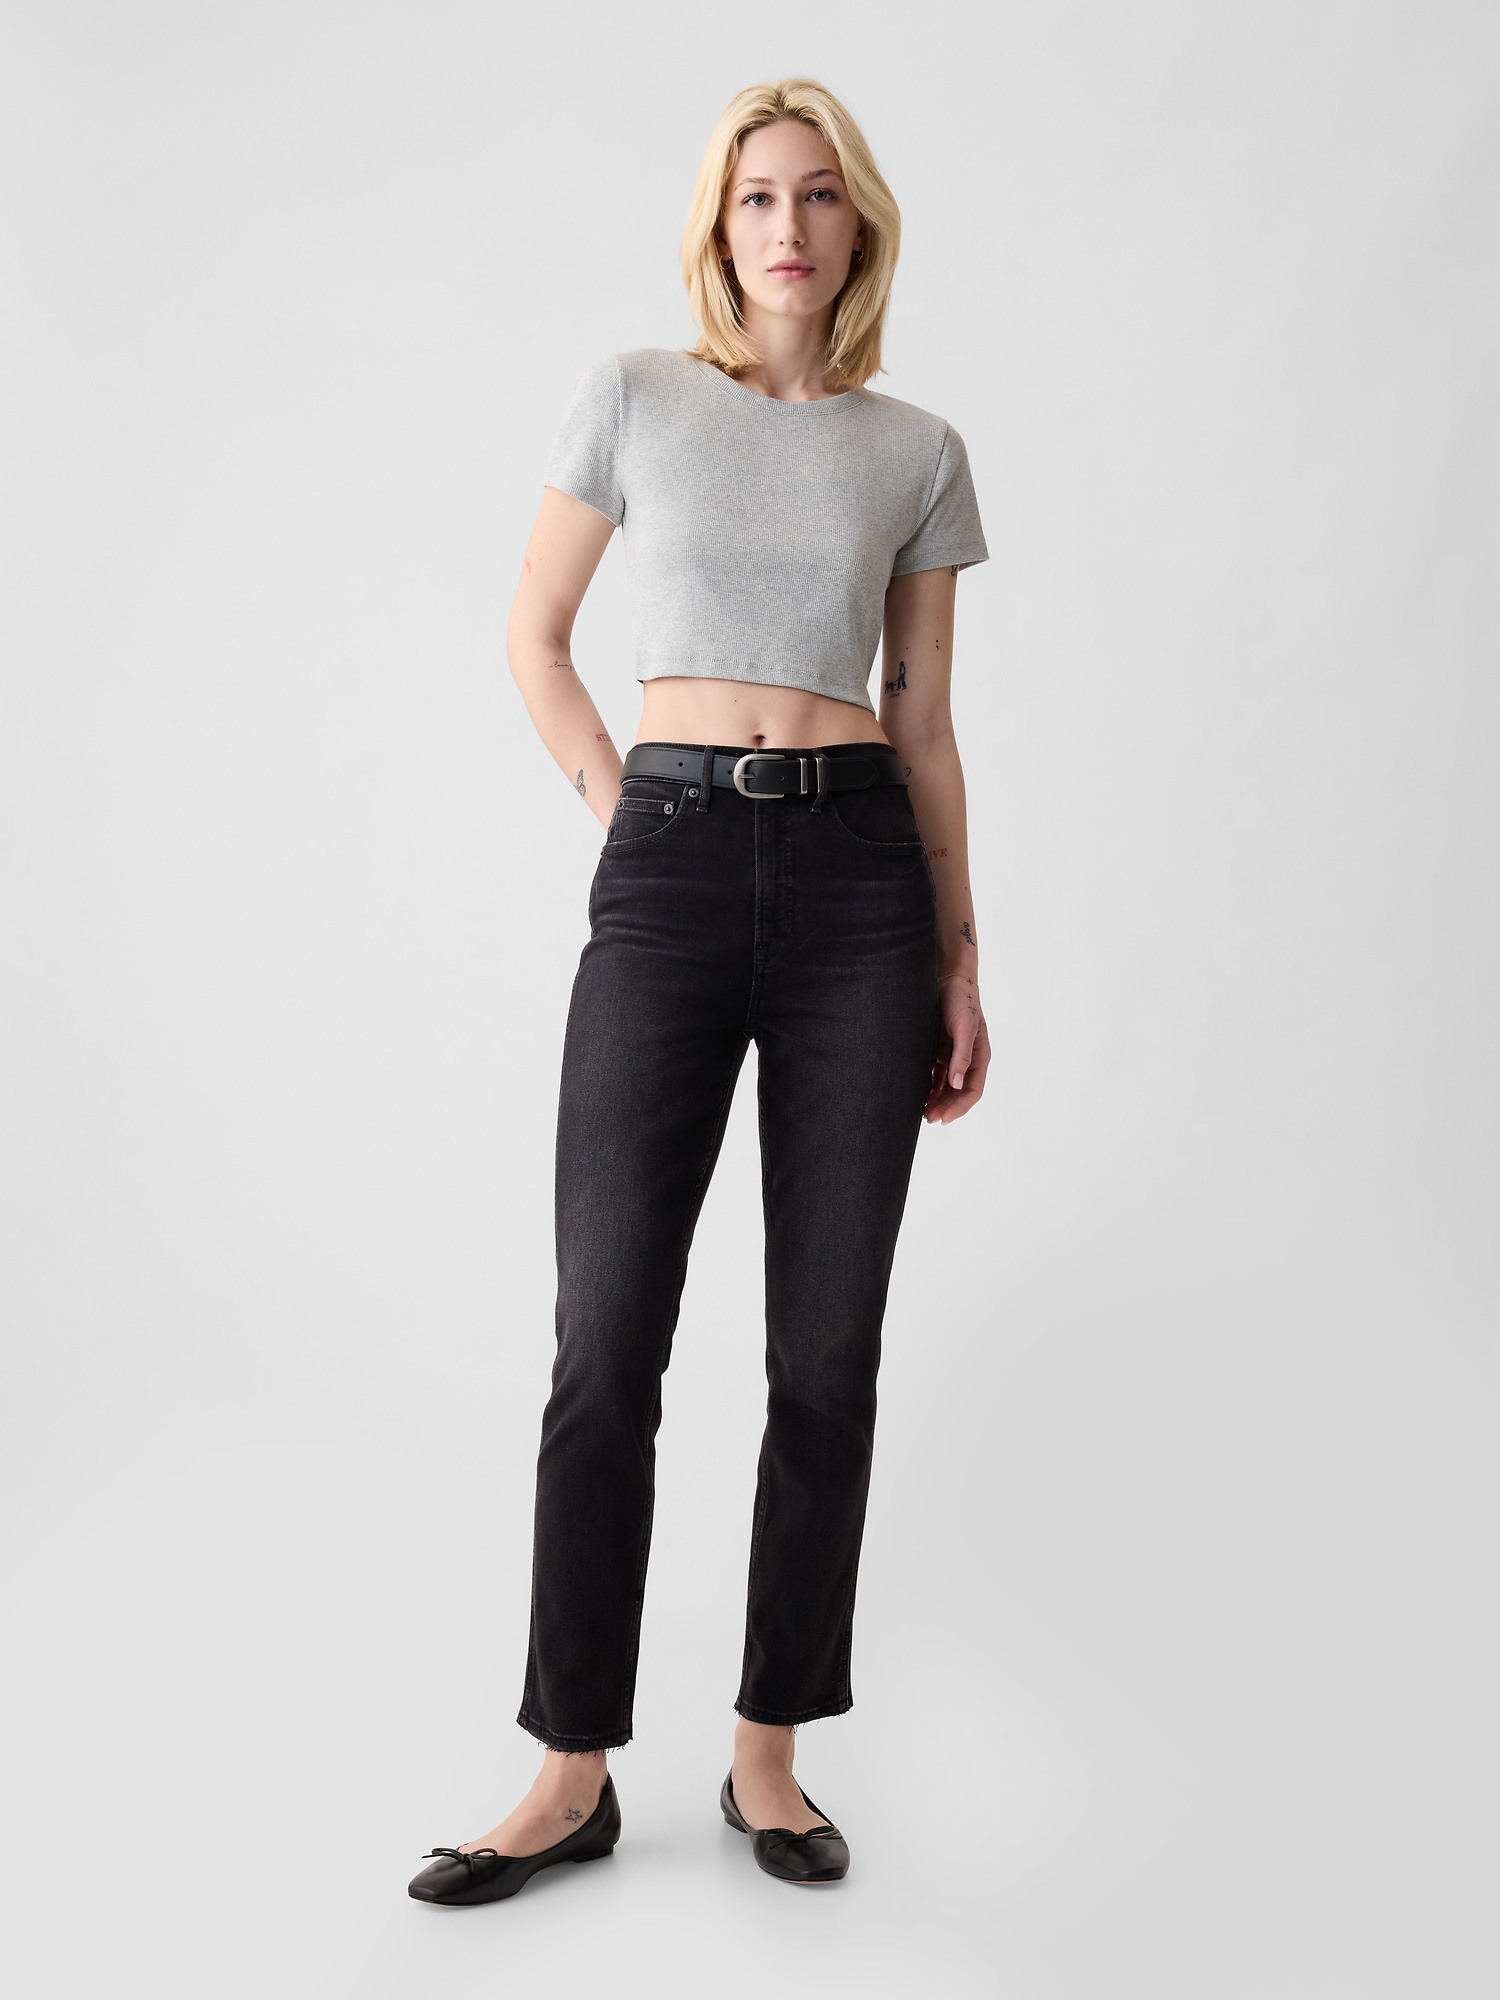 GAP, Jeans, White Gap Jeans Size 3 Regular Womens 2 Inseam 315 Per Gap  Sizing Chart